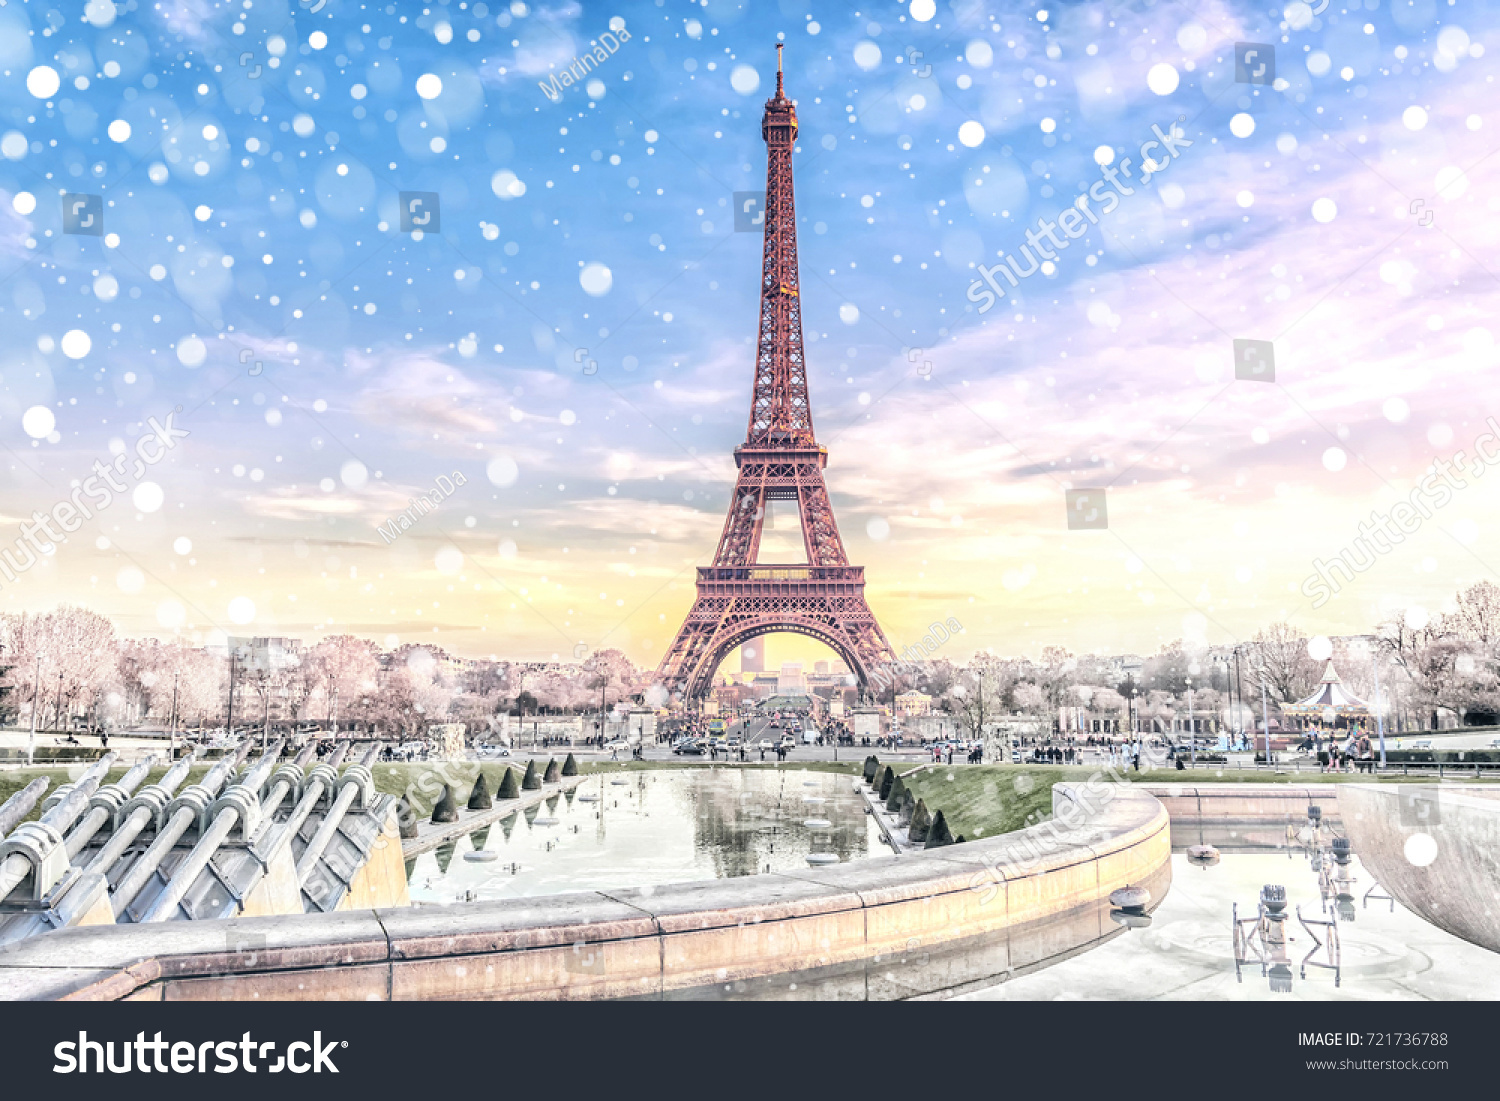 View Eiffel Tower Paris Christmas Time Stock Photo 721736788